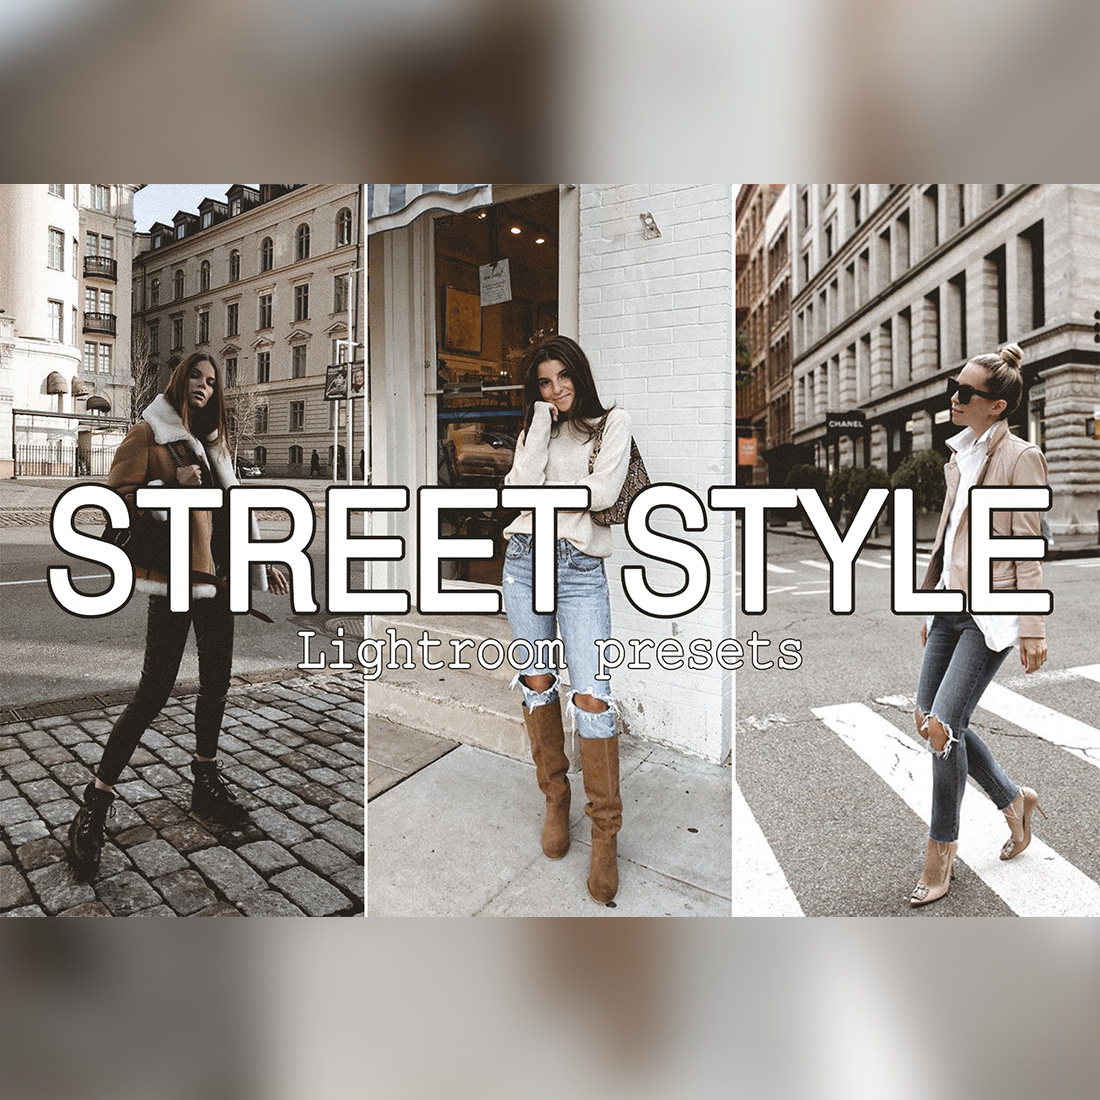 Street Style Mobile and Desktop Lightroom Presets cover image.